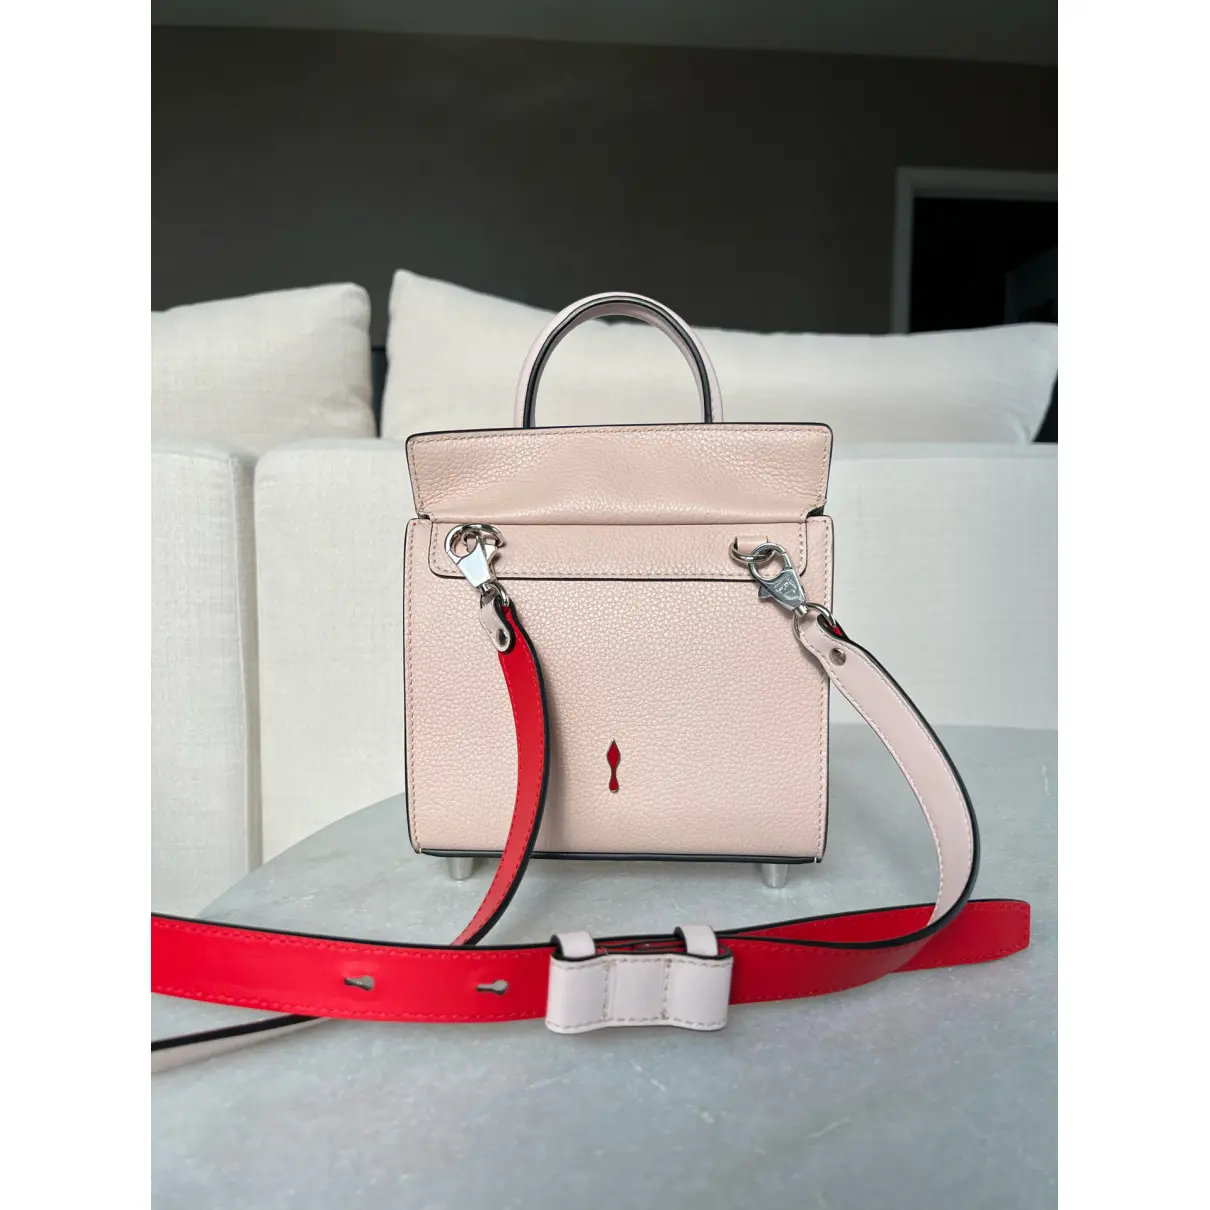 Buy Christian Louboutin Paloma leather handbag online